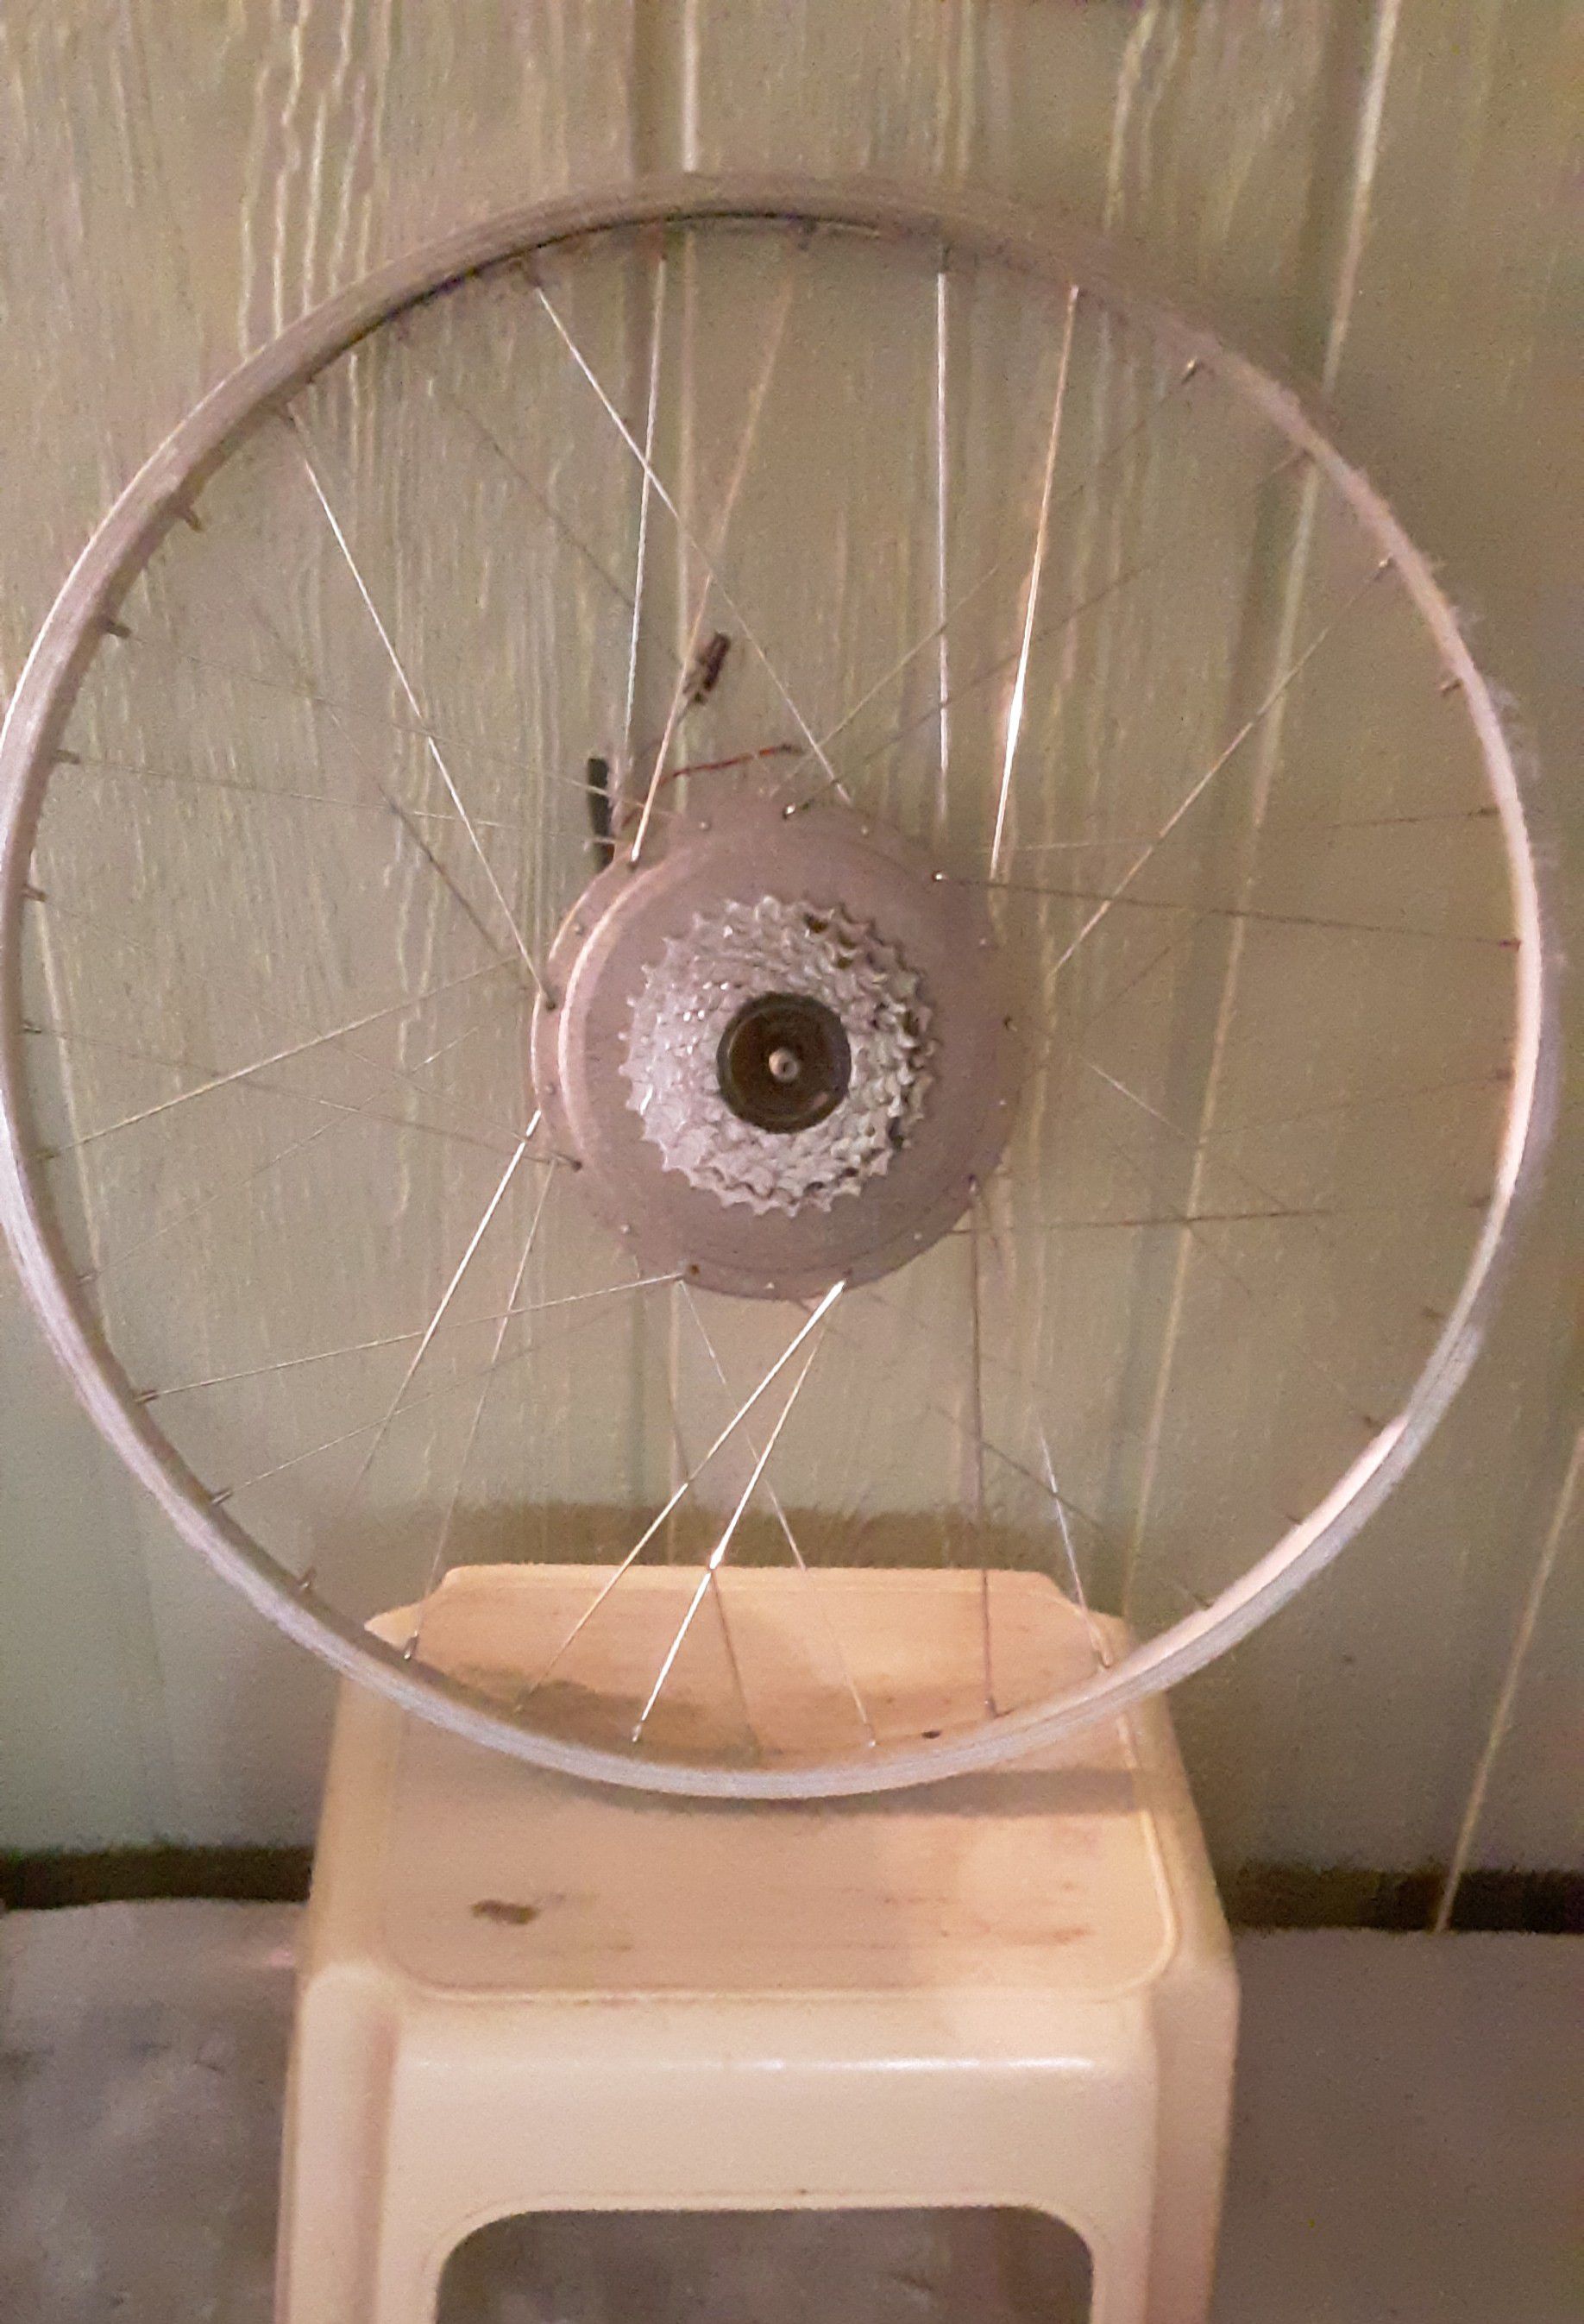 Heinzmann 26" electric bicycle wheel